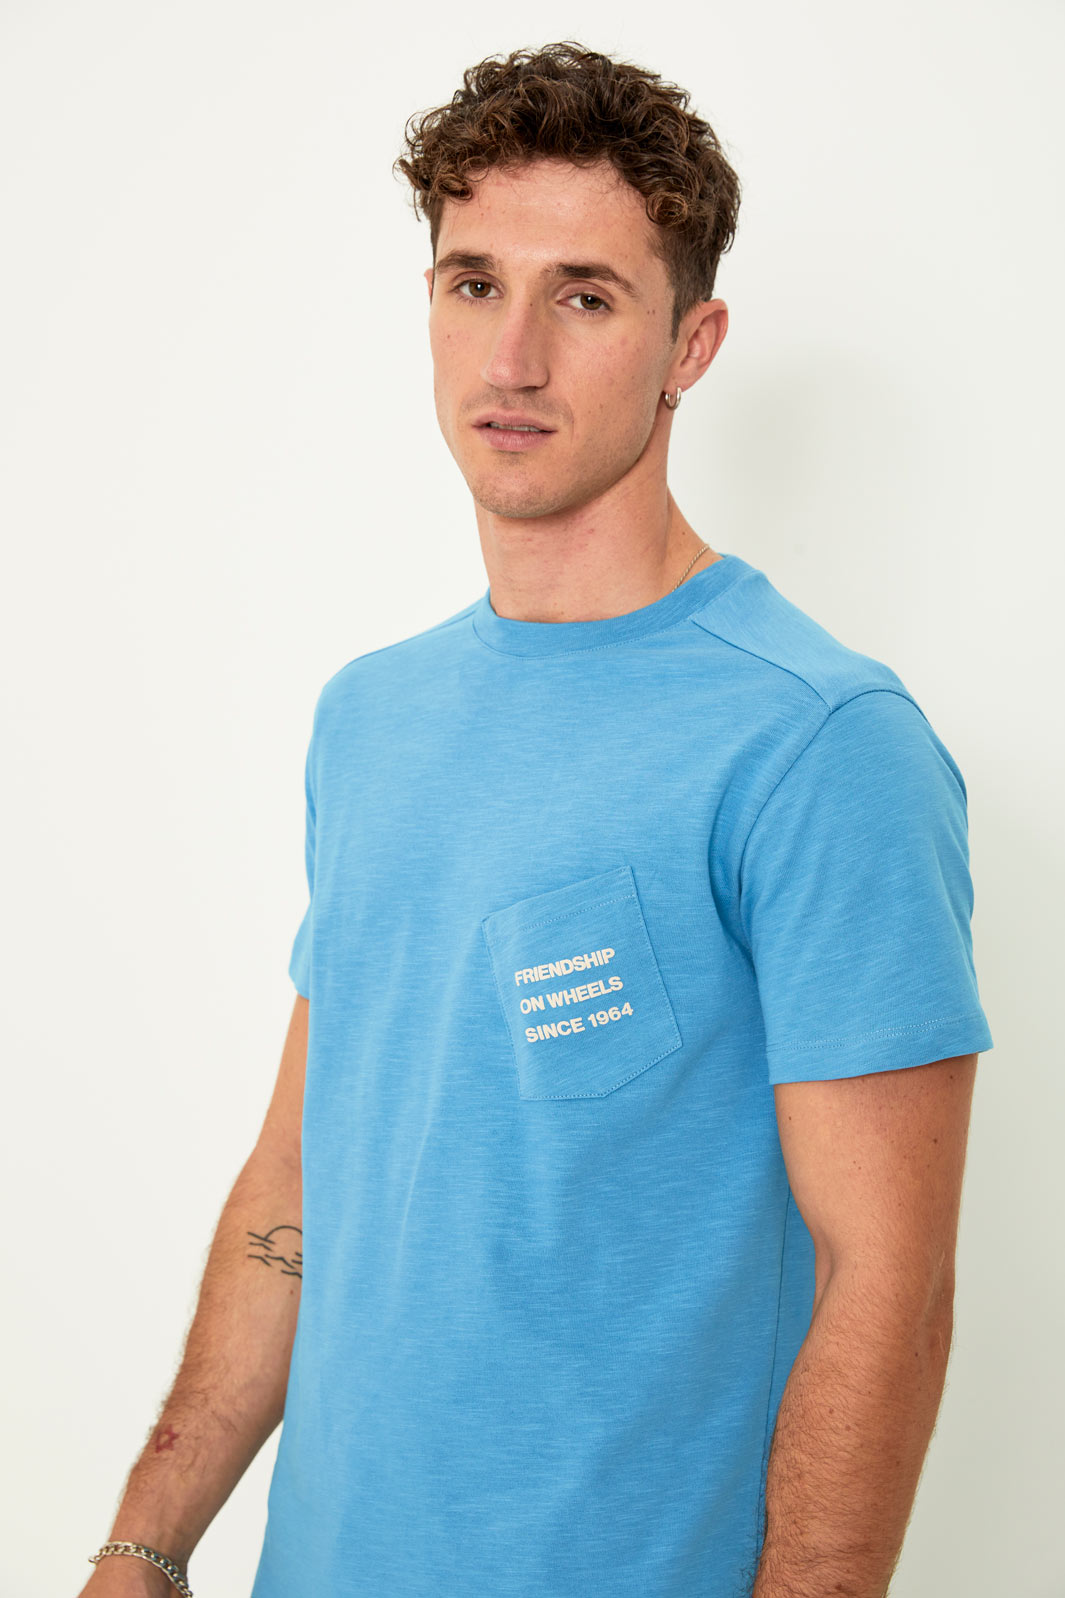 Camiseta bolsillo Friends (Azul claro)